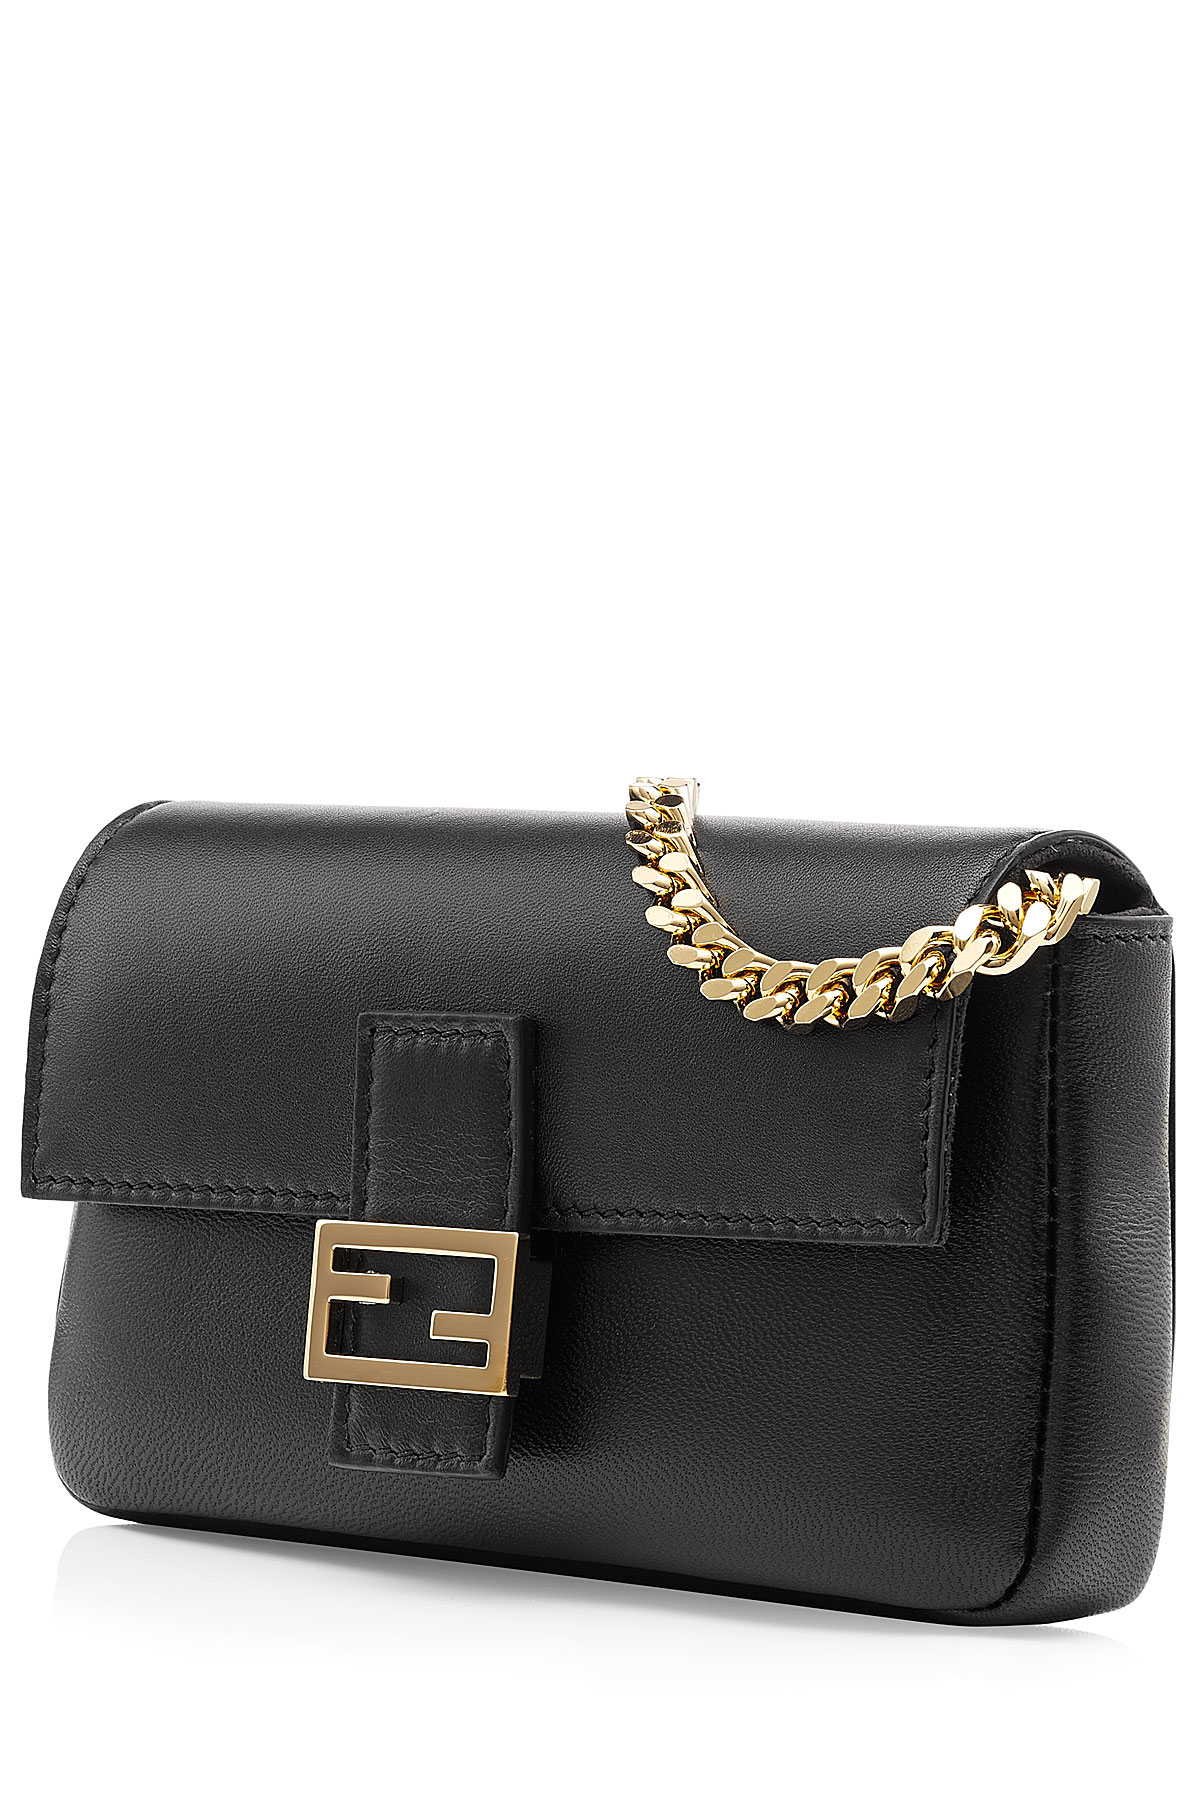 Fendi Micro Baguette Leather Shoulder Bag - Black in Black | Lyst